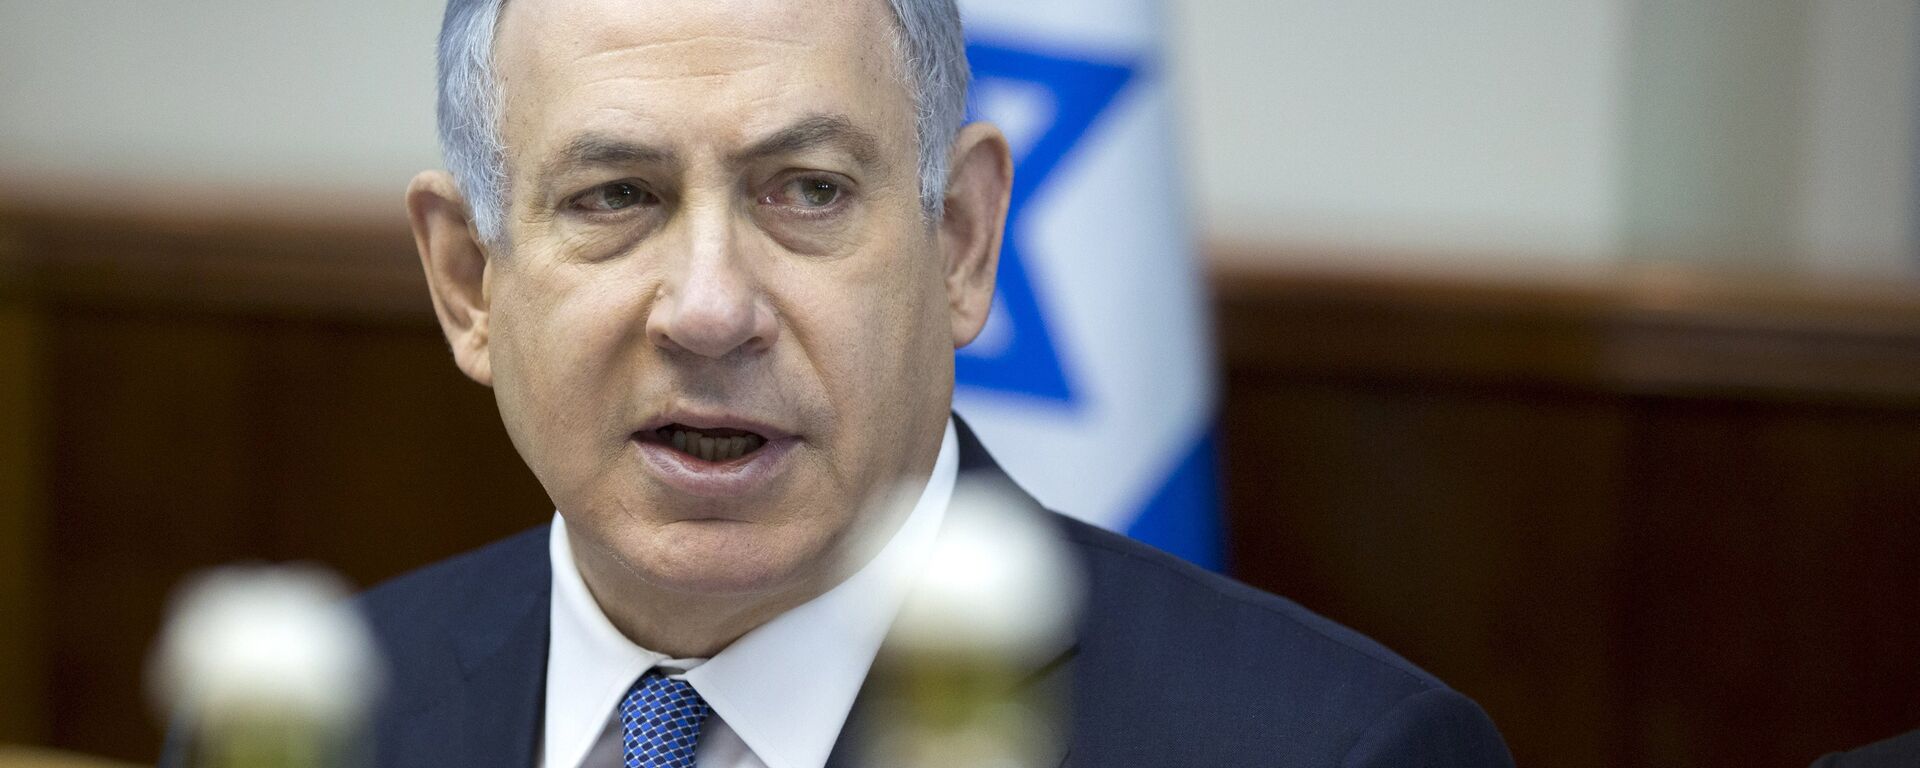 Benjamín Netanyahu, primer ministro de Israel - Sputnik Mundo, 1920, 13.04.2021